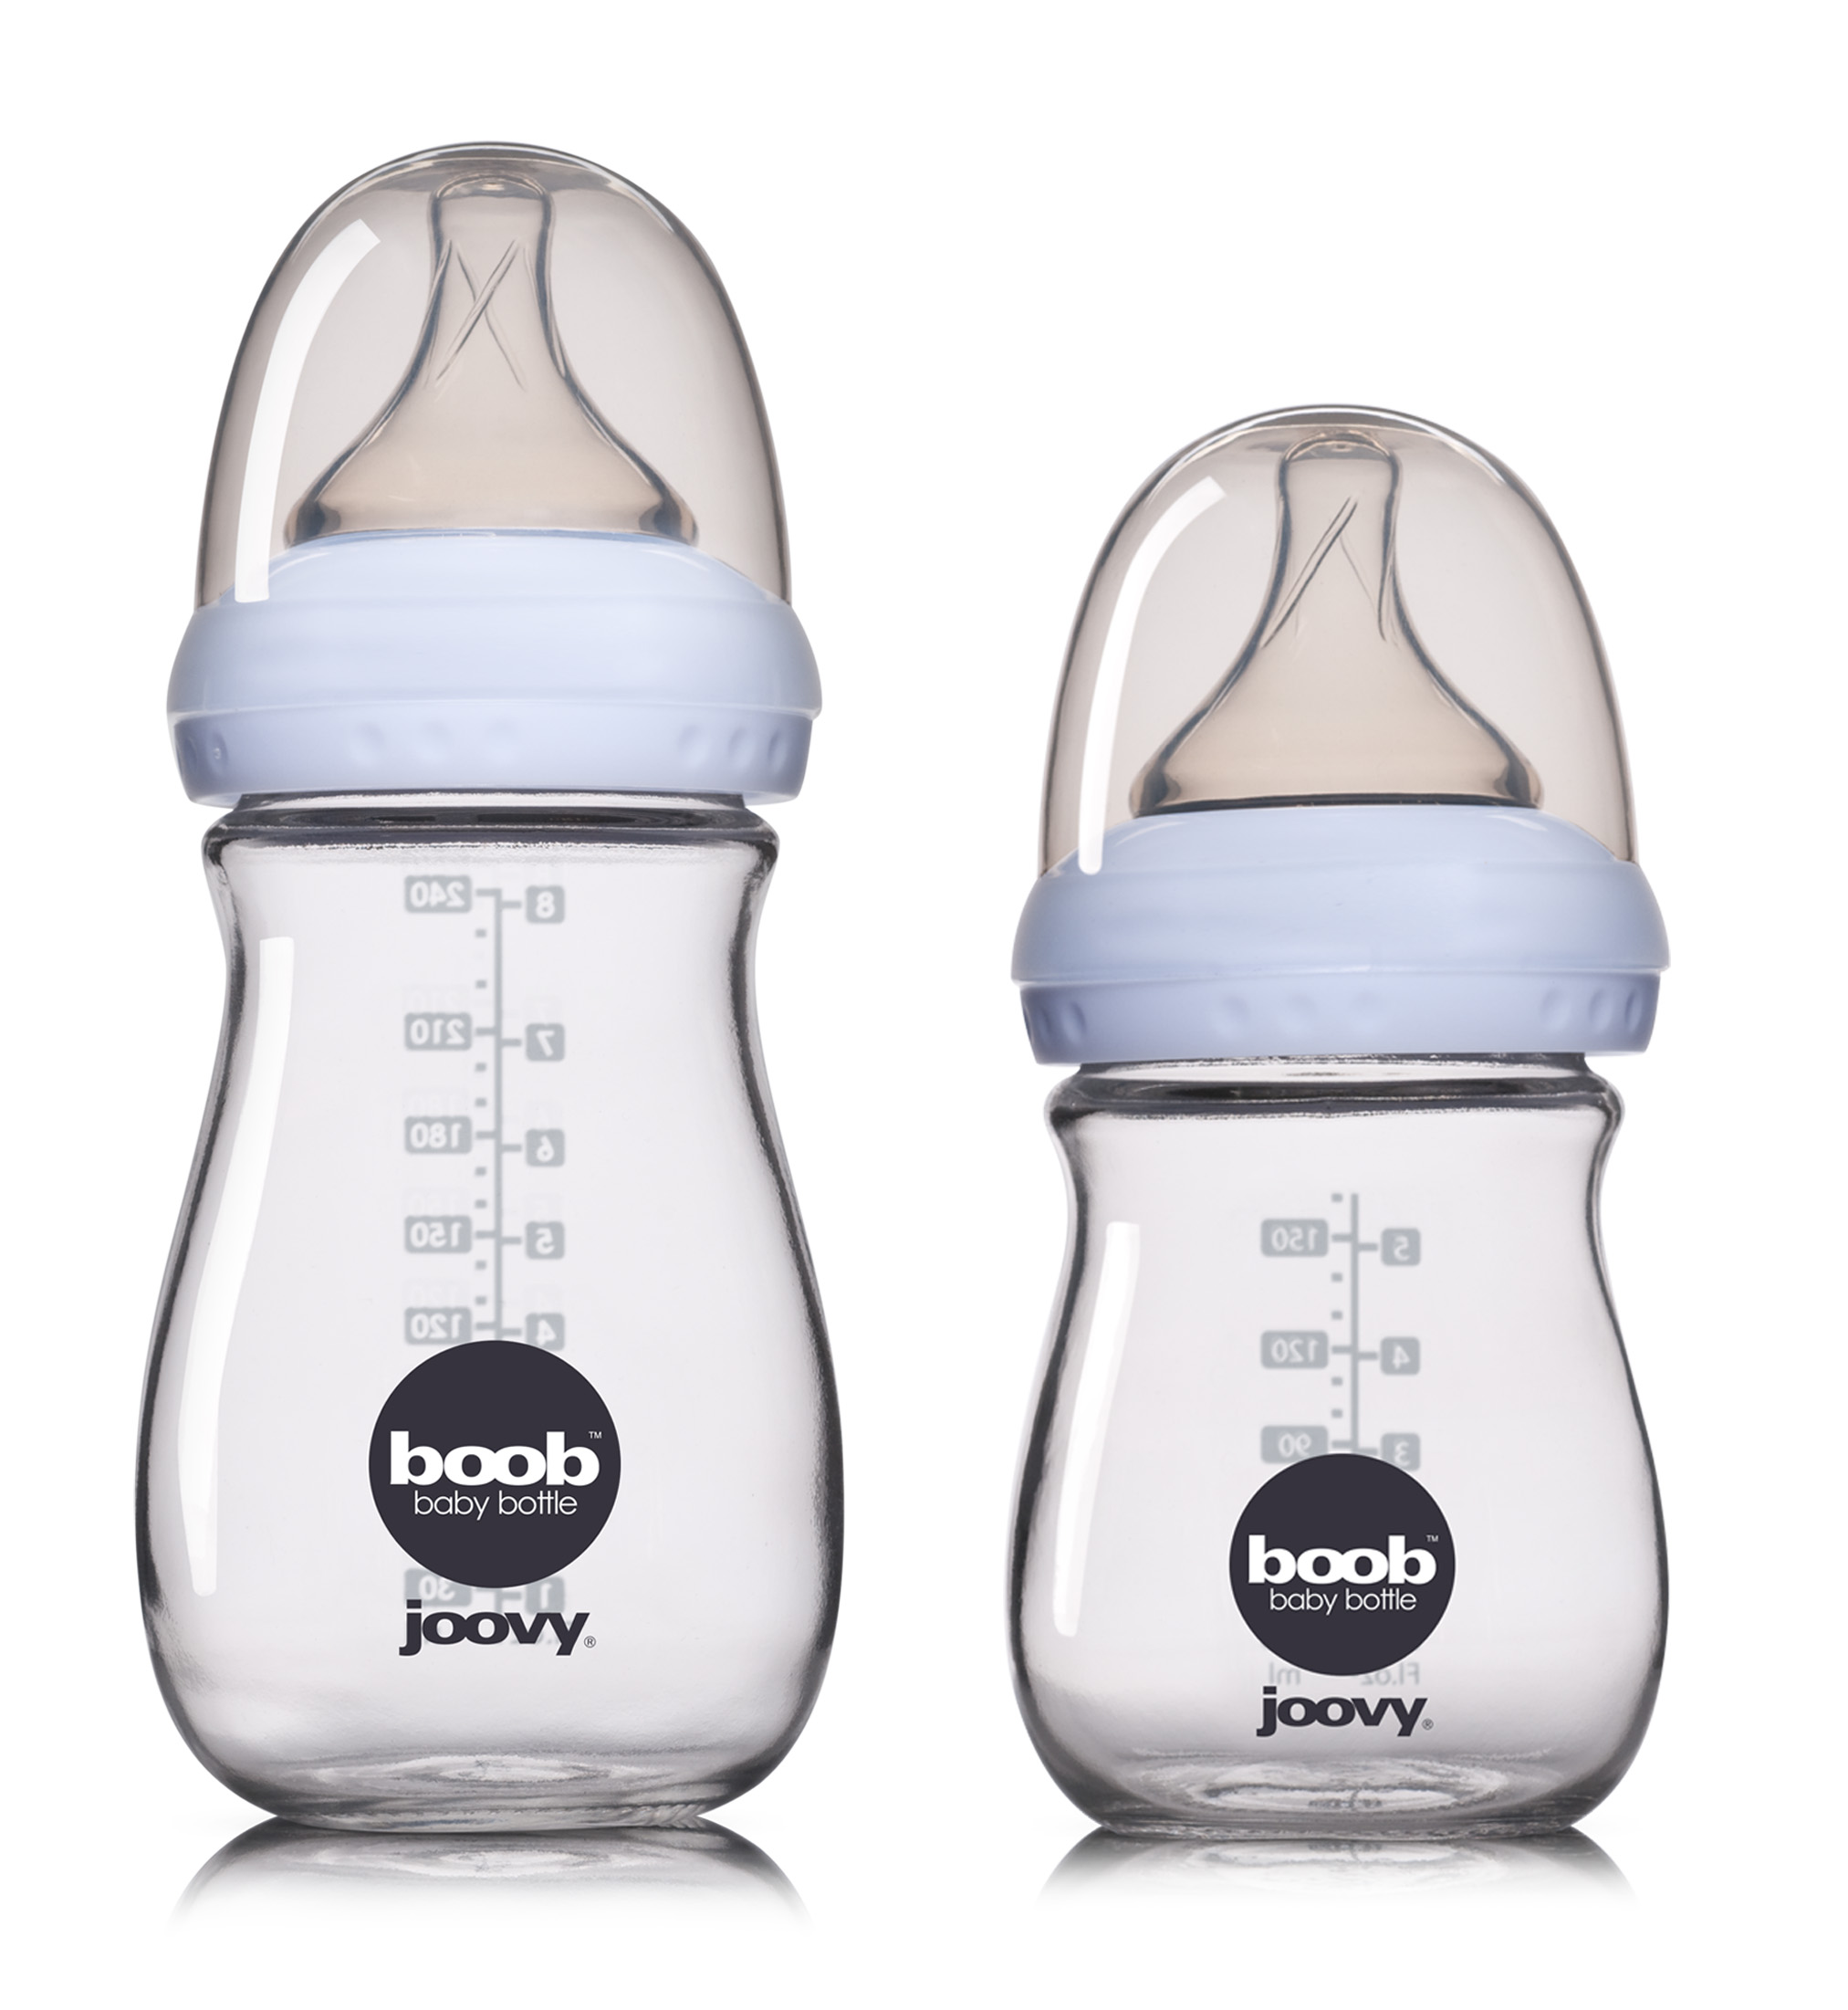 Boob Baby Bottle Glass, baby bottle